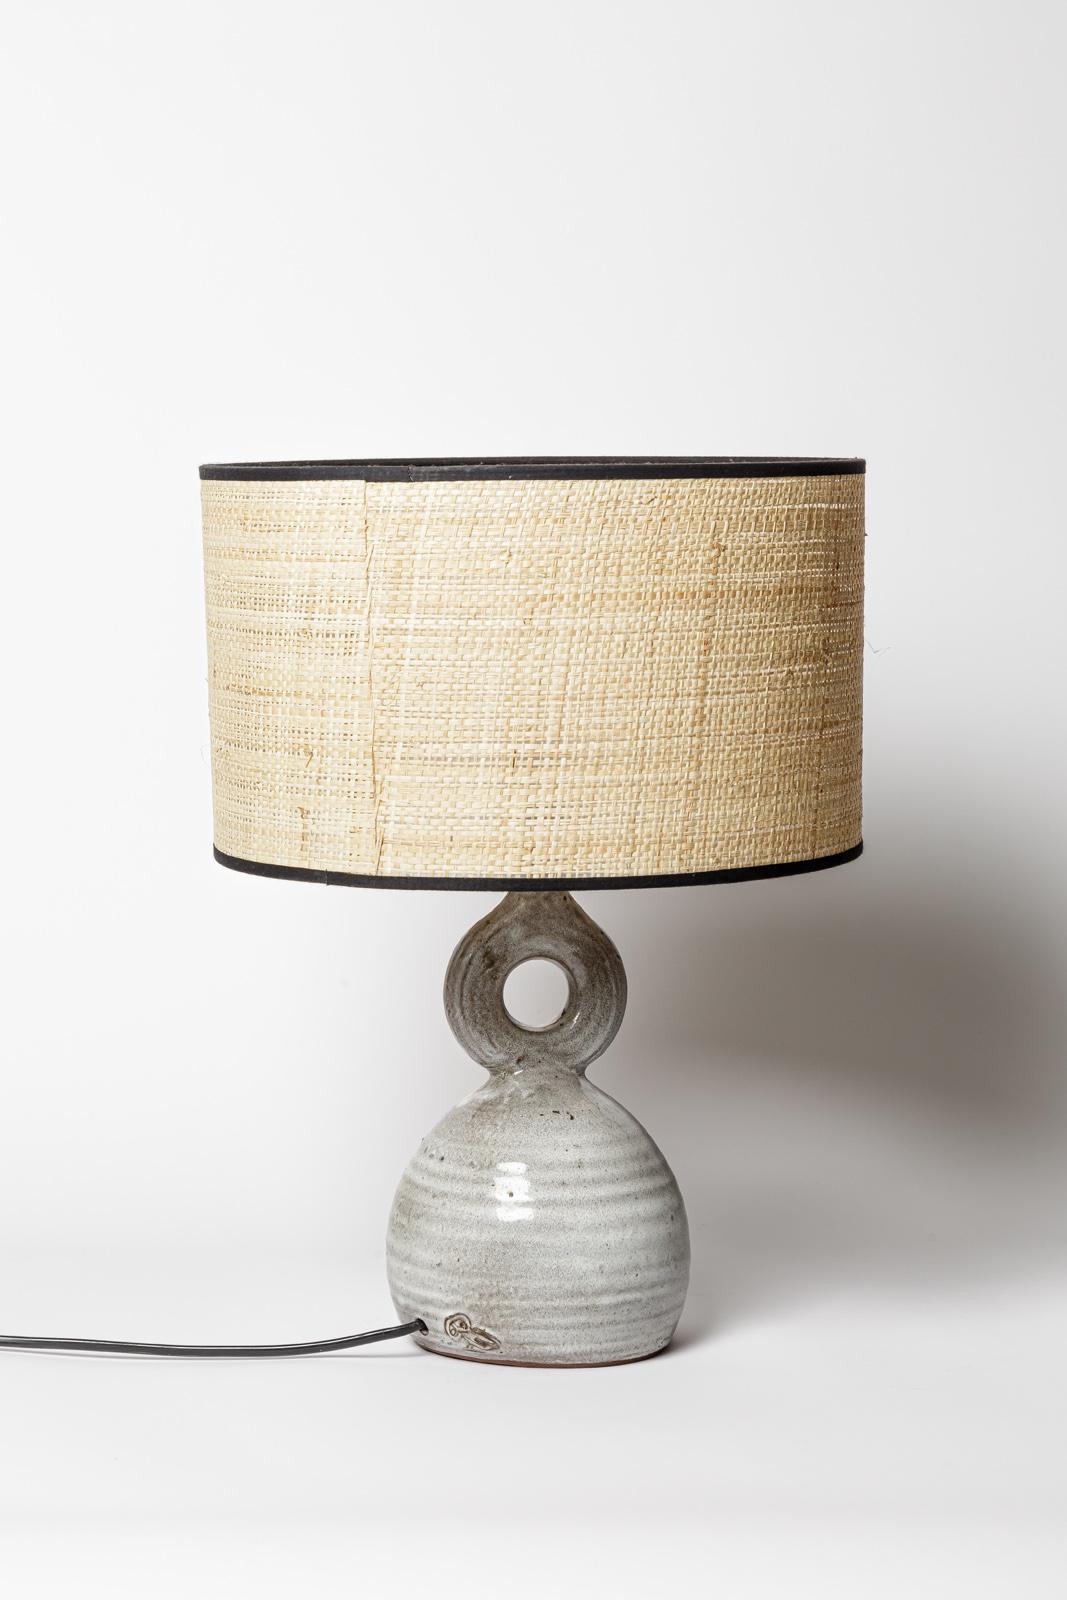 Ceramic 20th century design white ceramic table lamp by Jeanne and Norbert Pierlot 1960